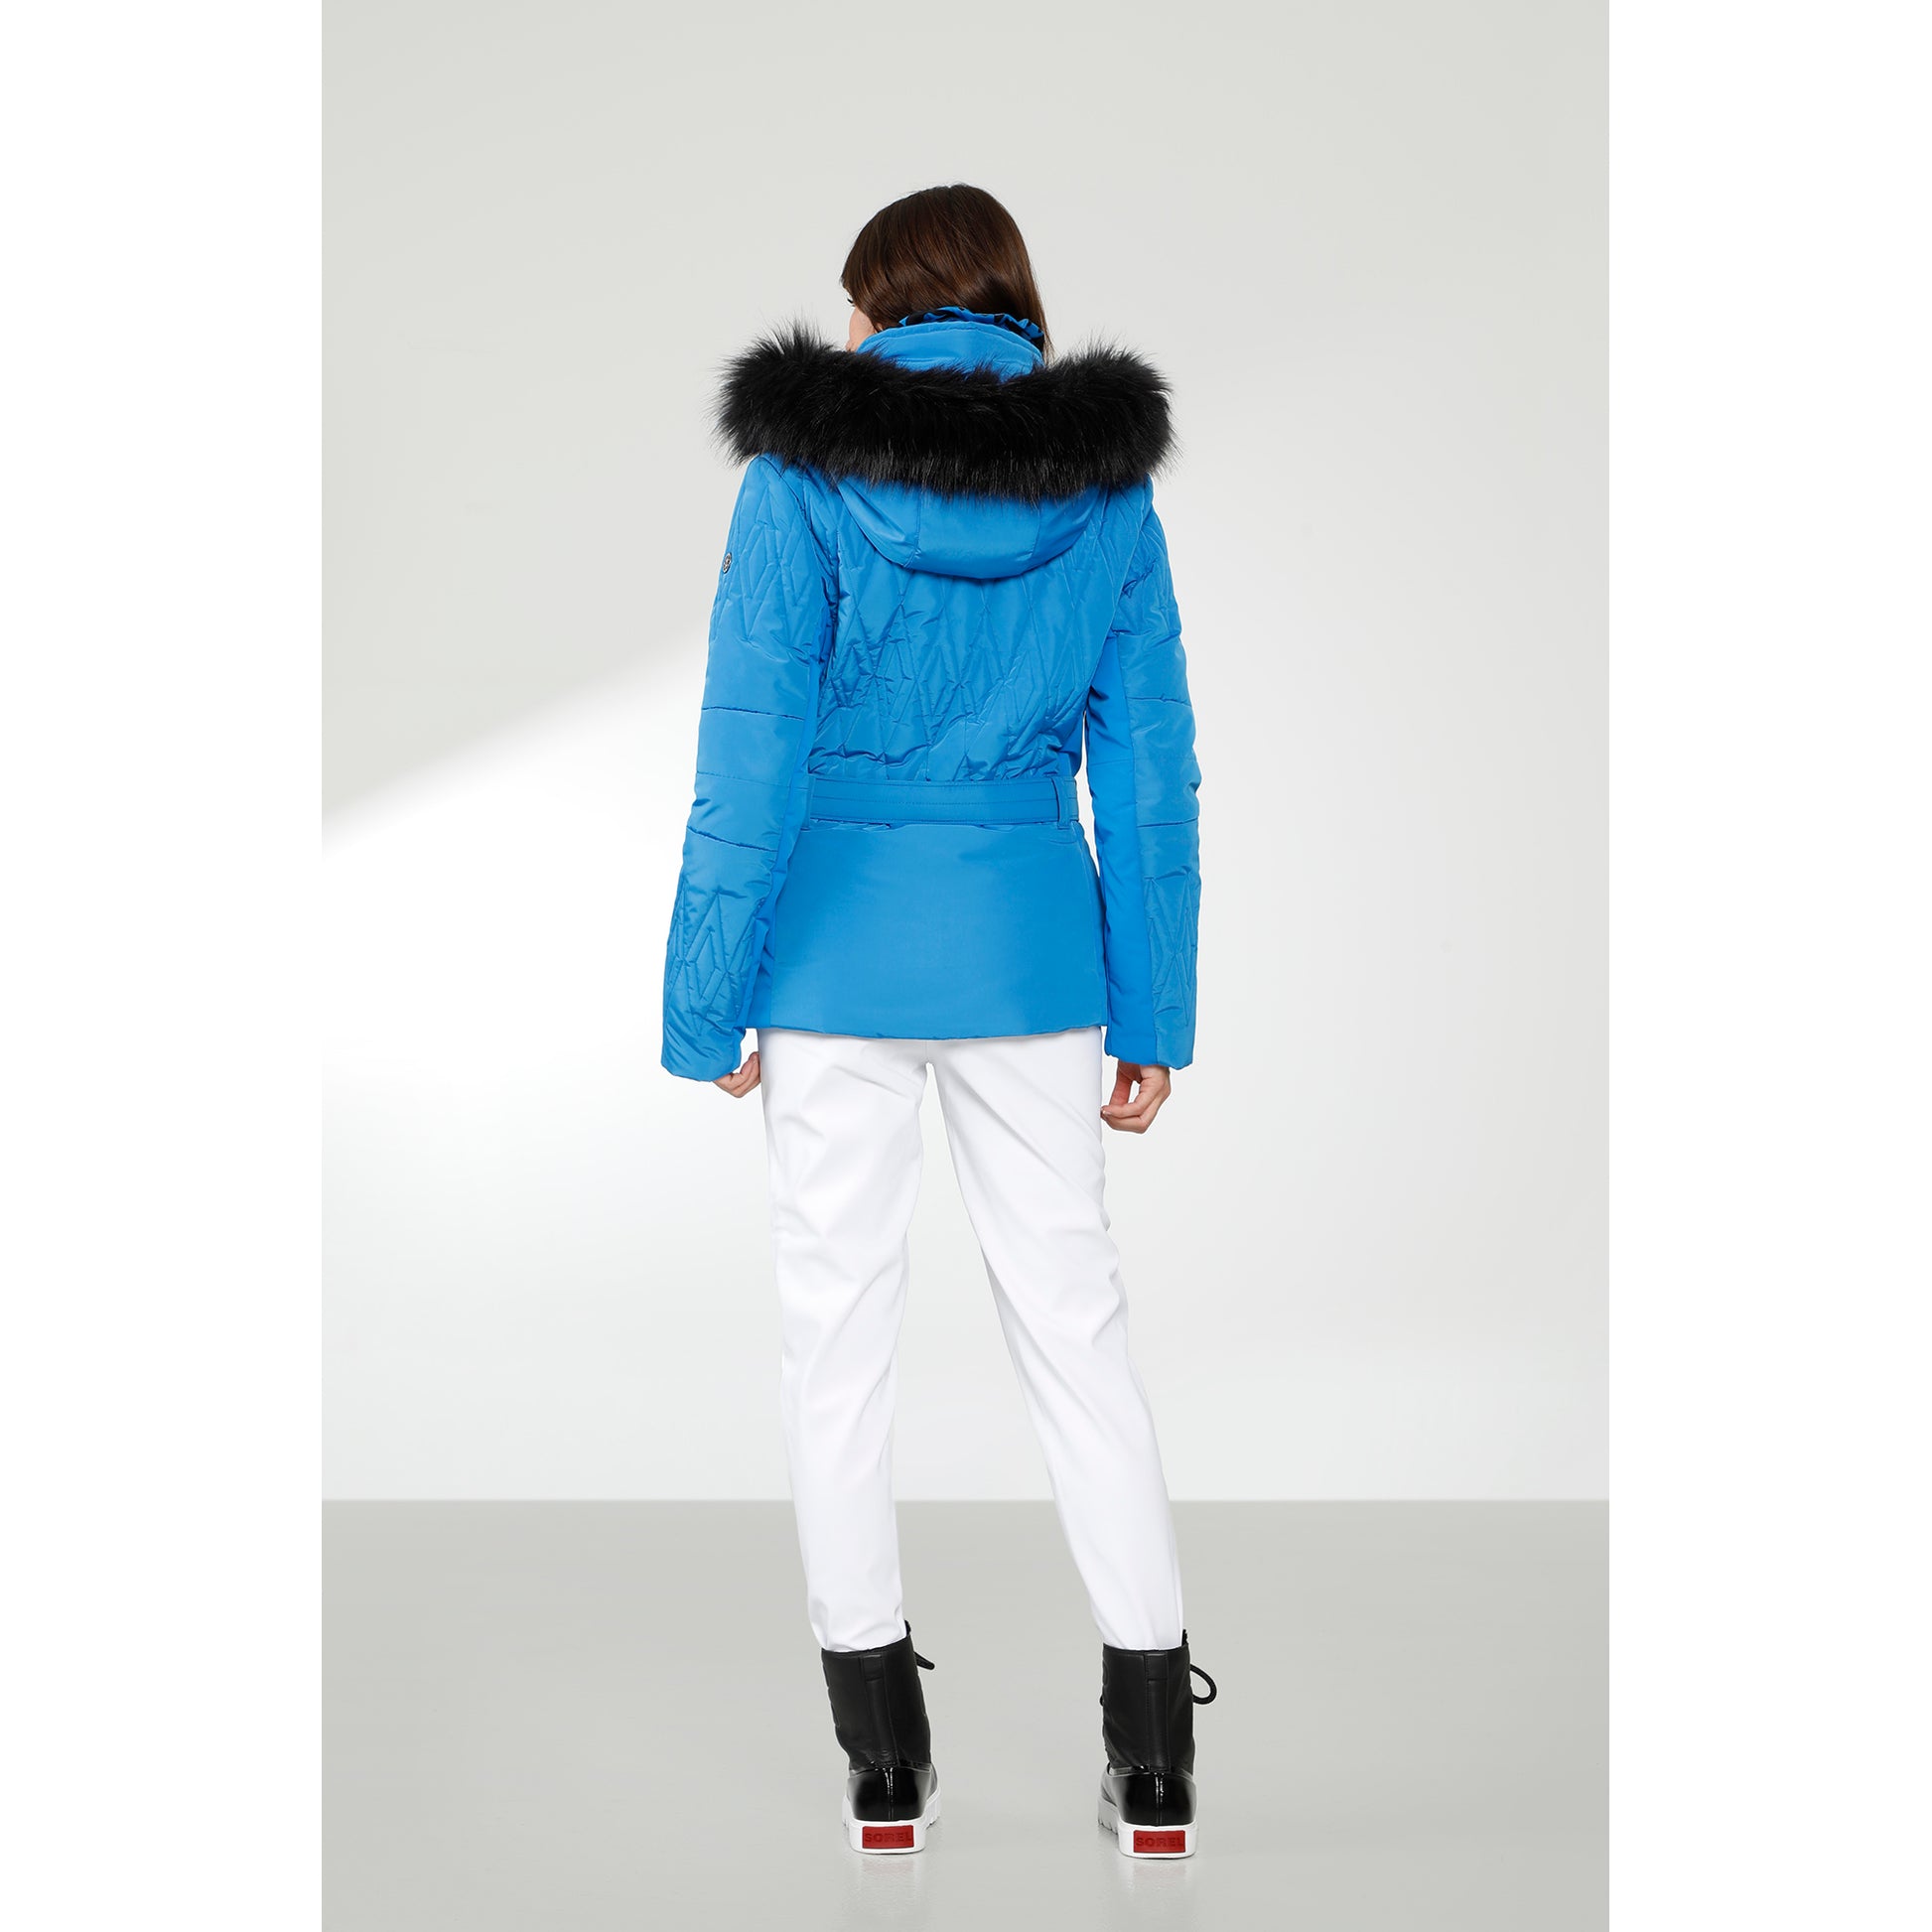 Poivre Blanc Women's Hybrid Ski jacket in White 1003